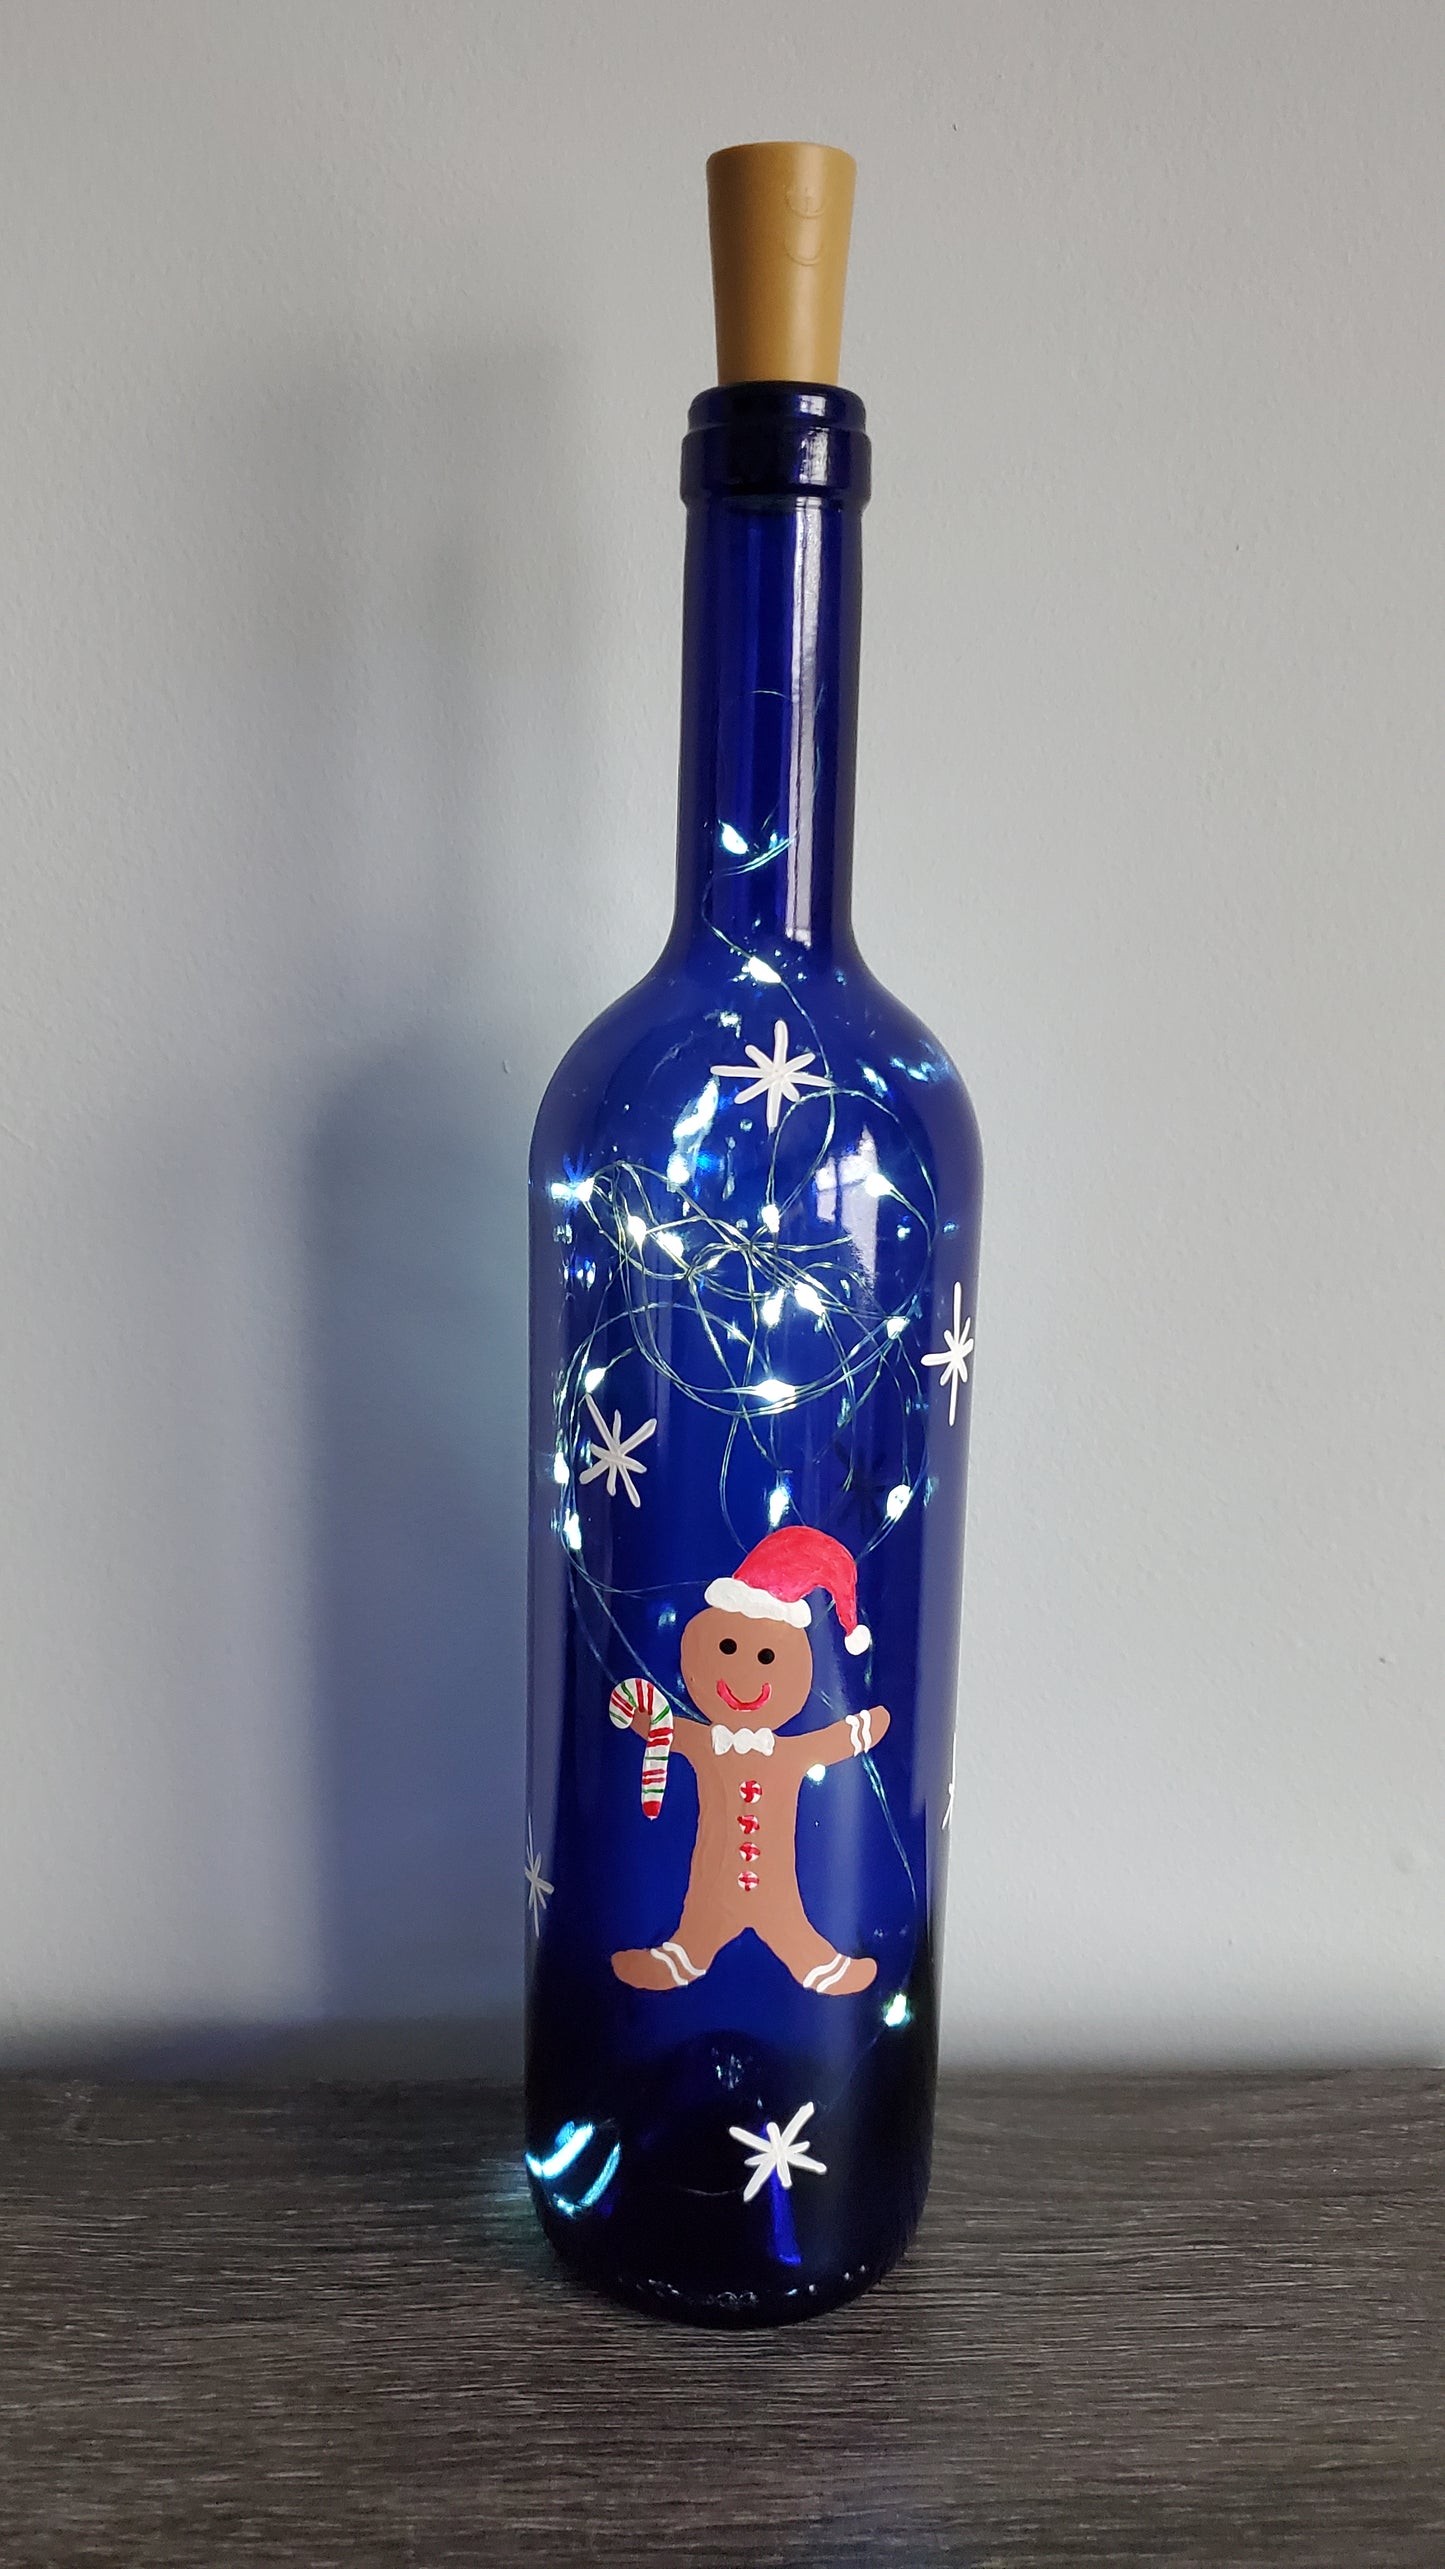 Gingerbread man lighted wine bottle